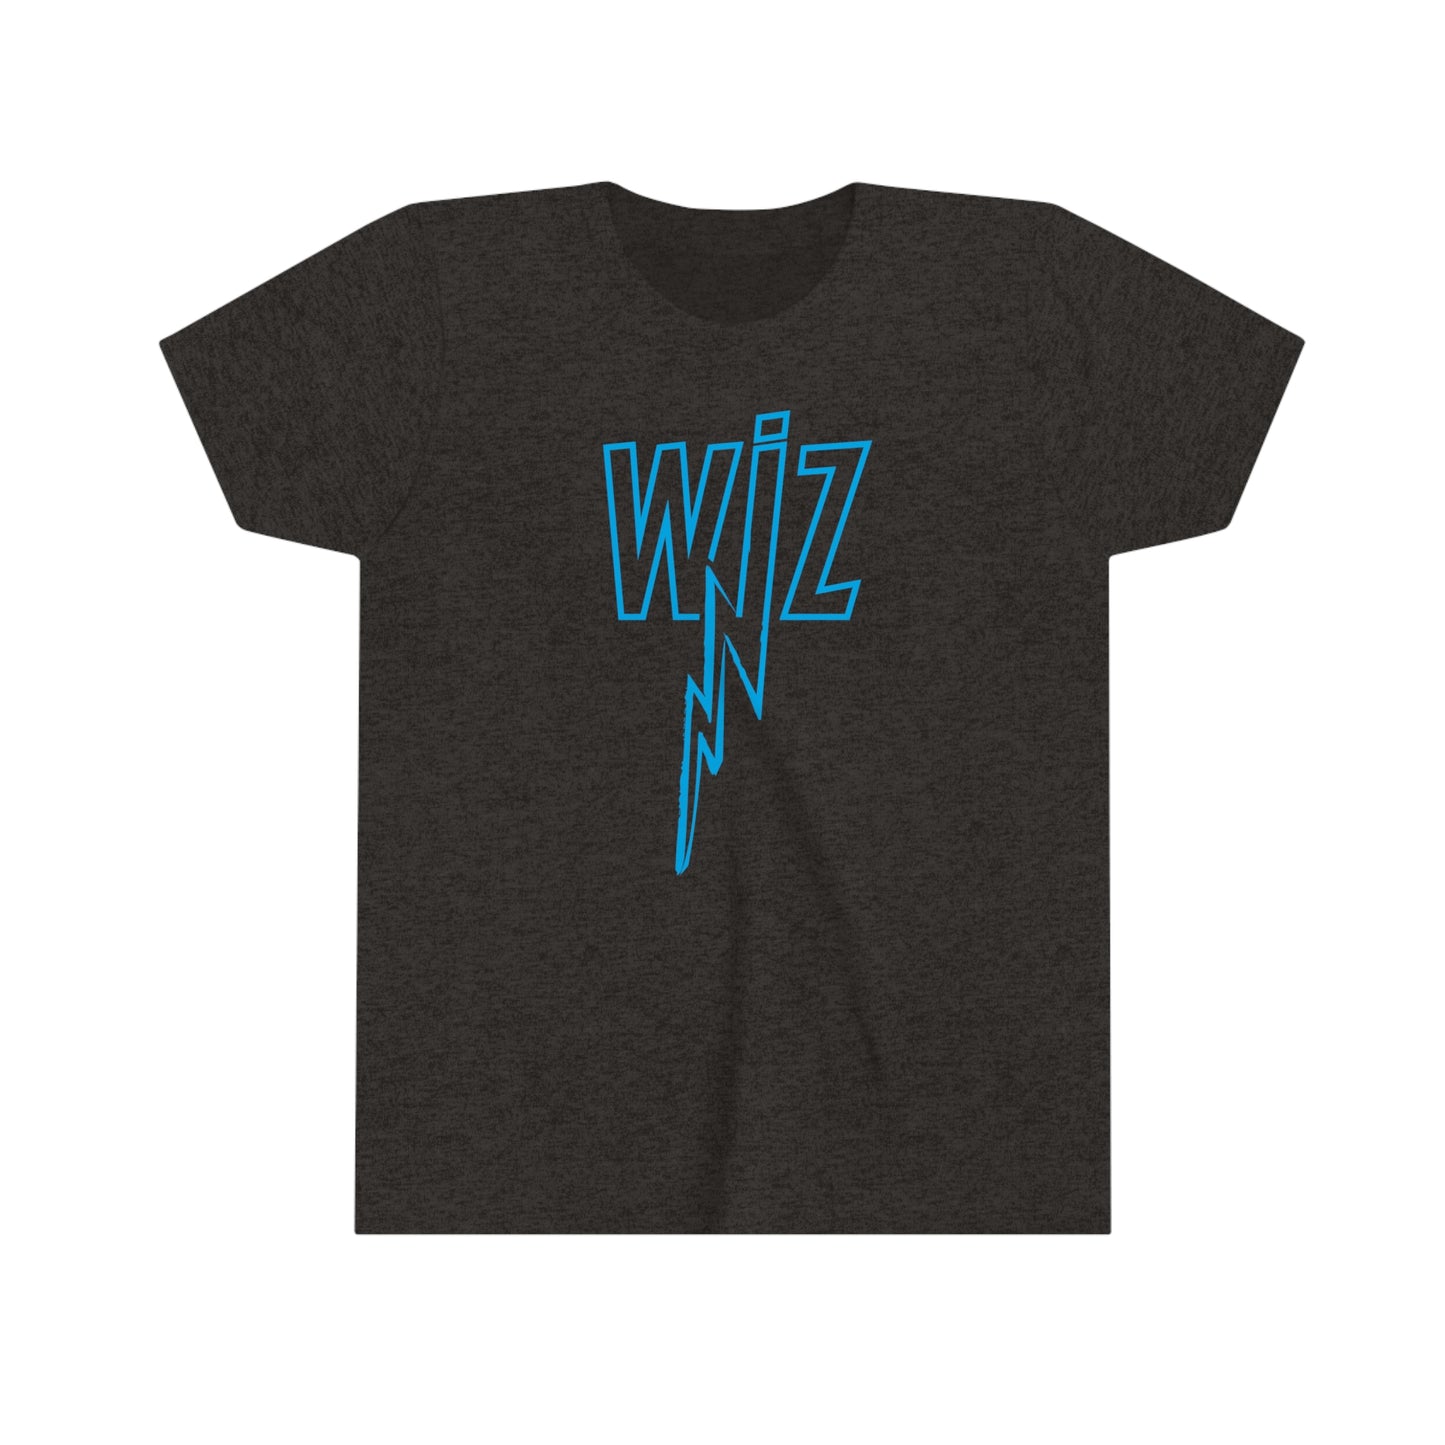 Wiz Front Print, Logo Back Print in Soft, Lightweight Cotton Kidz Tee